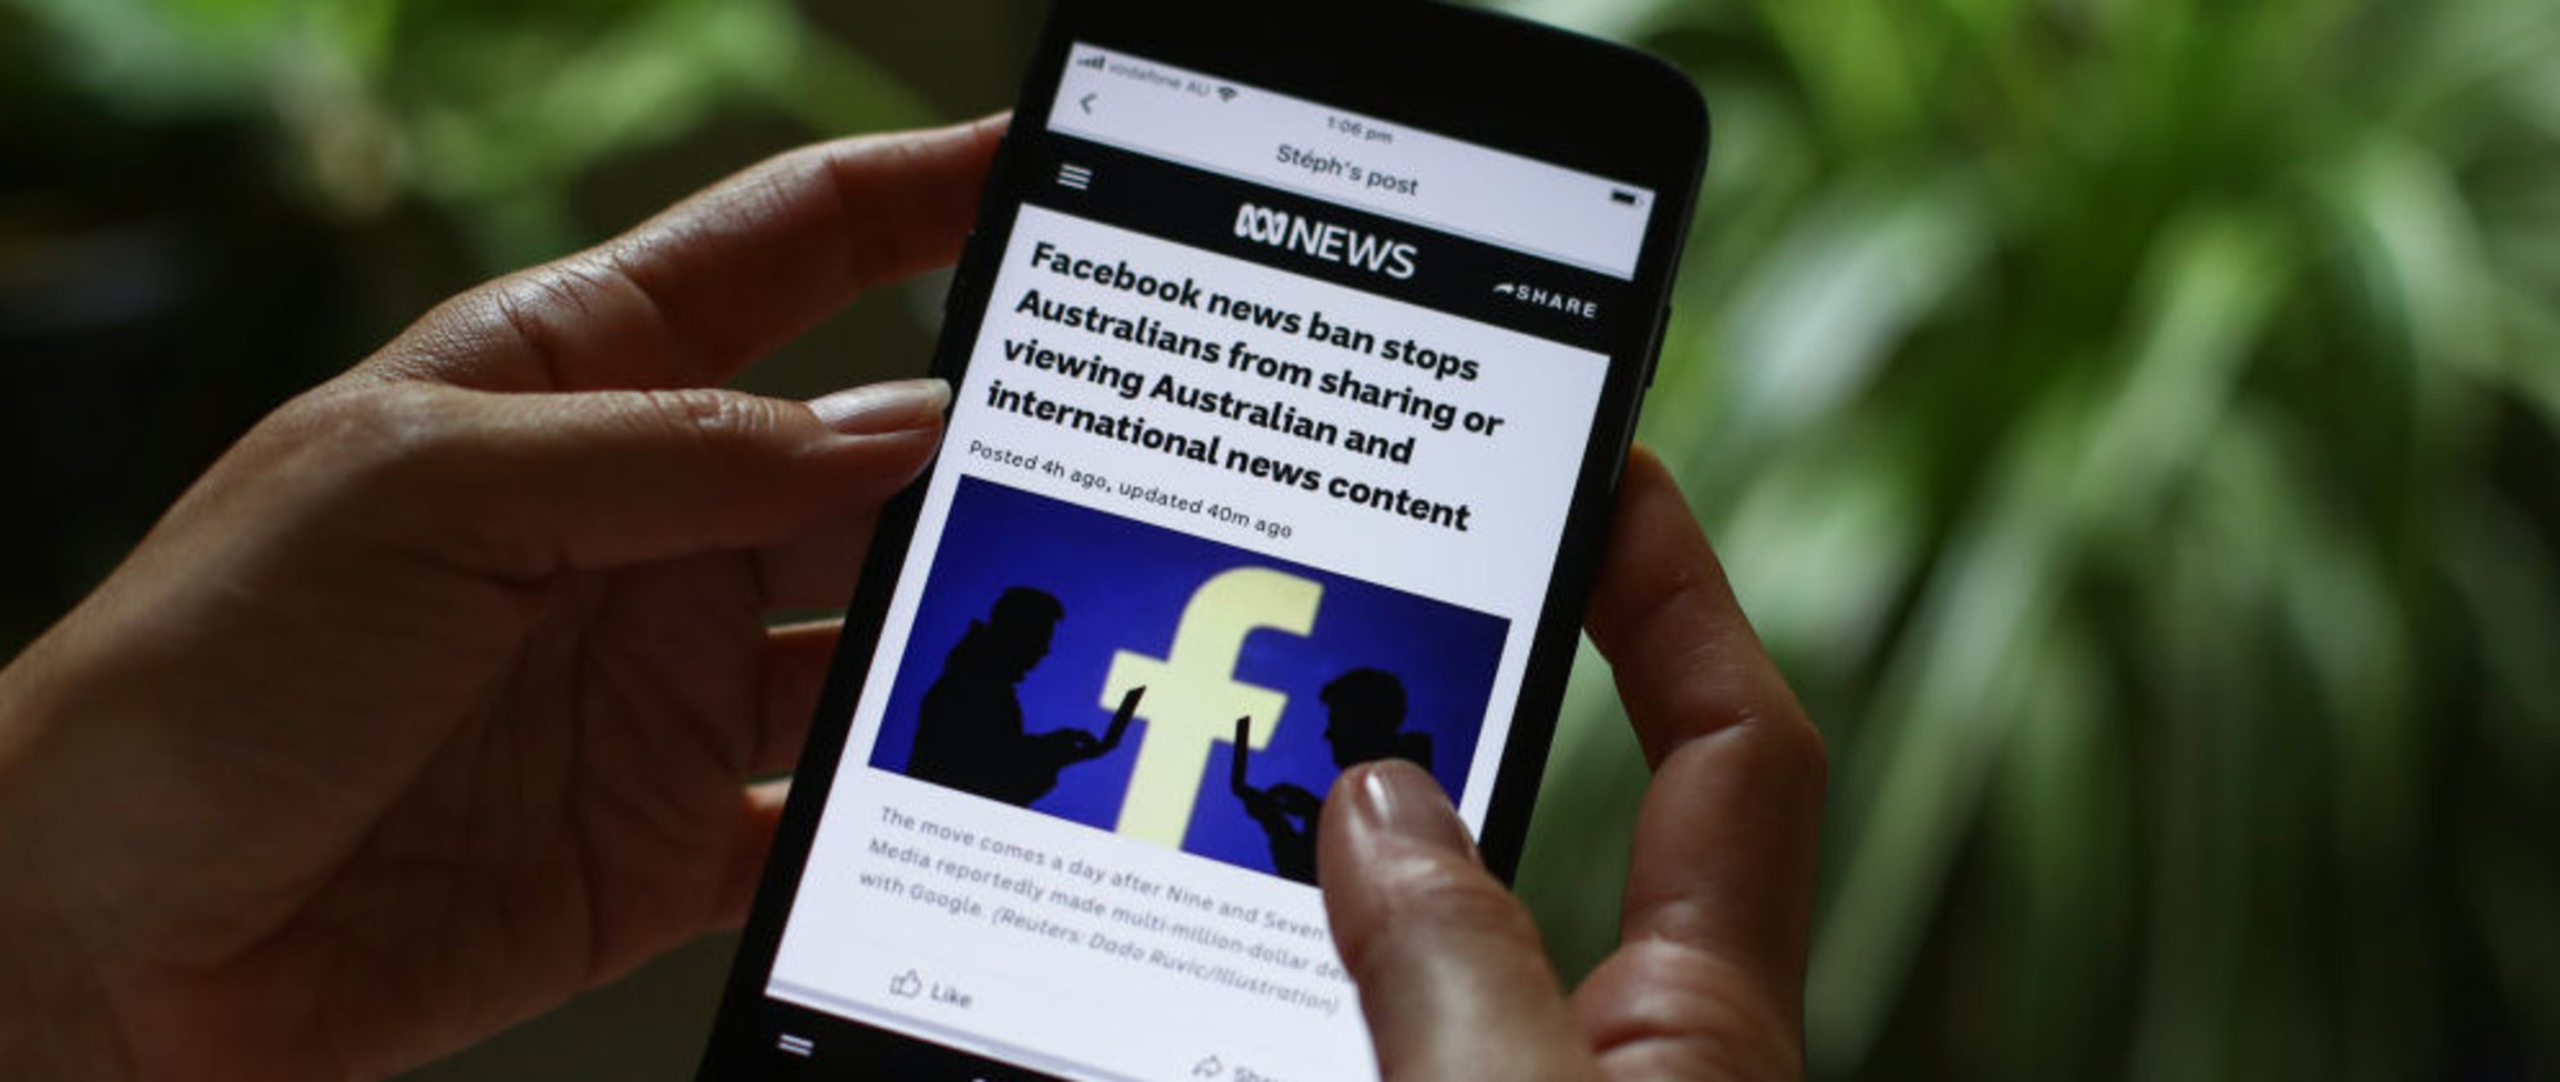 Facebook must blocking Australian news sites from being shared - Amnesty International